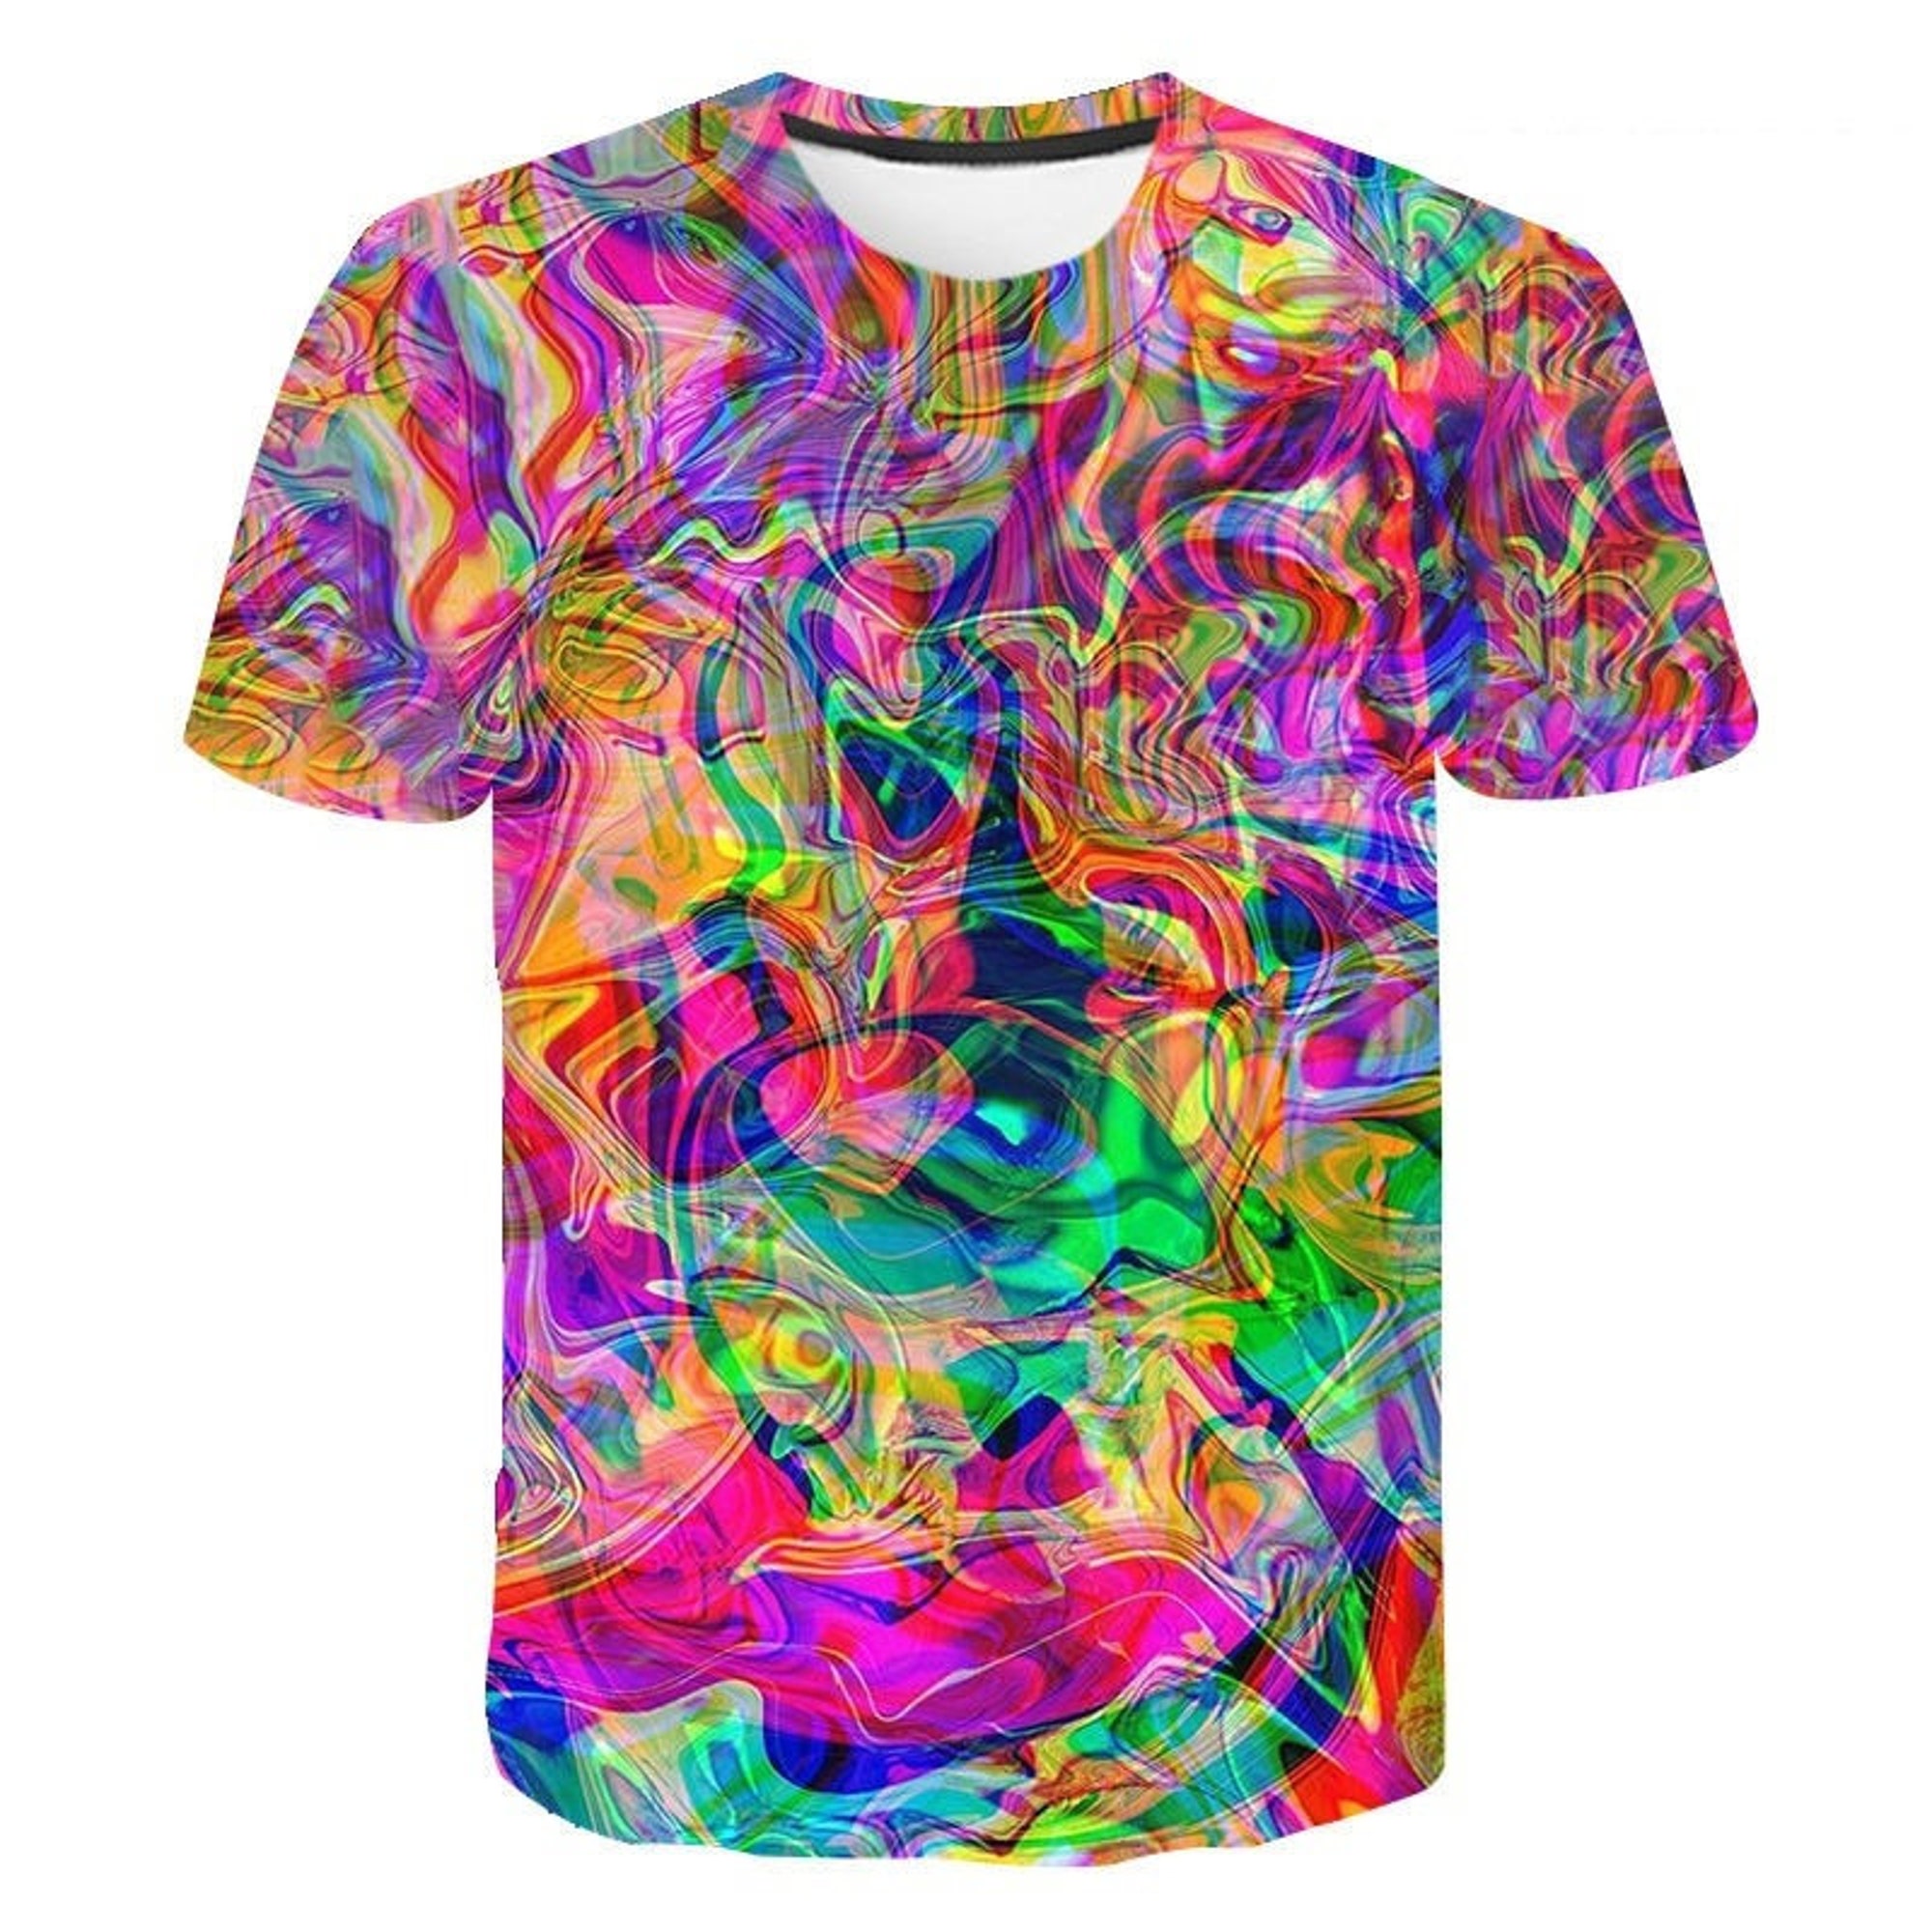 Colorful shirt new T-shirt summer cool shirts